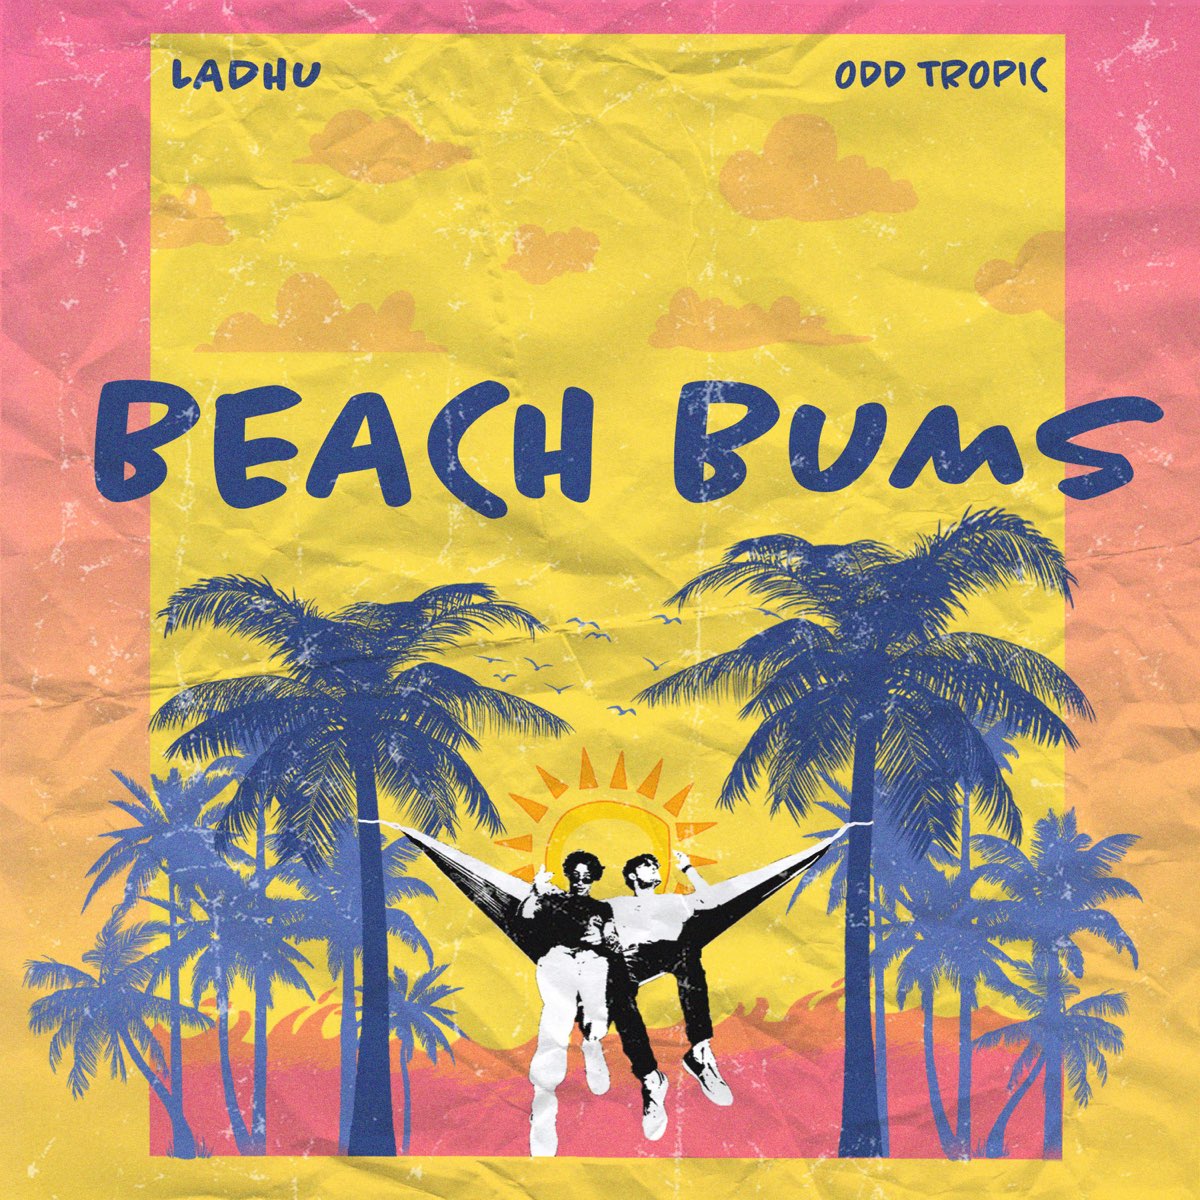 Beach Bums Single By Ladhu Odd Tropic On Apple Music